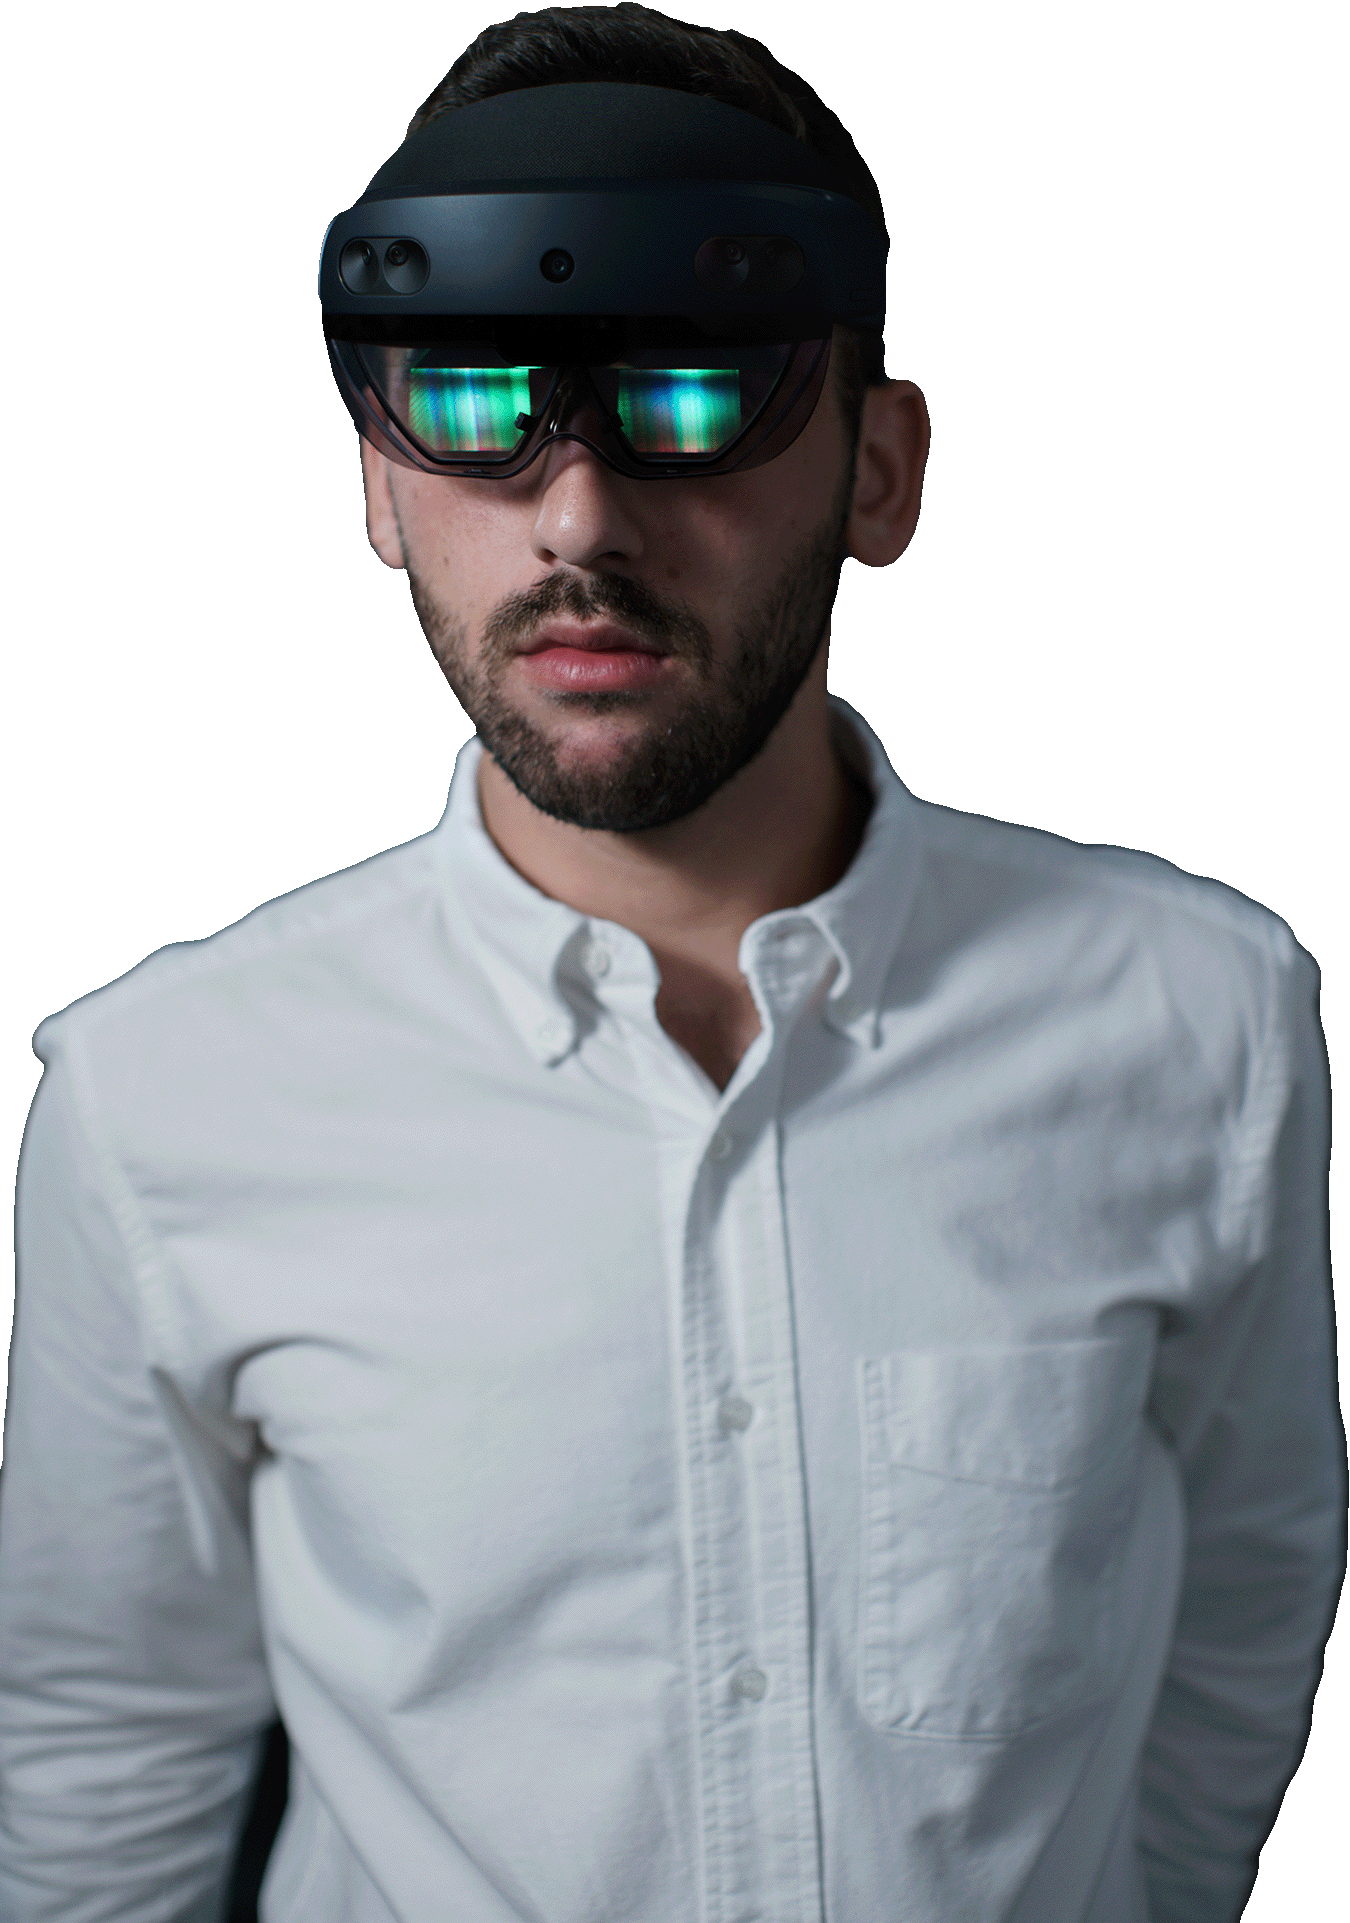 Ethan wearing a HoloLens